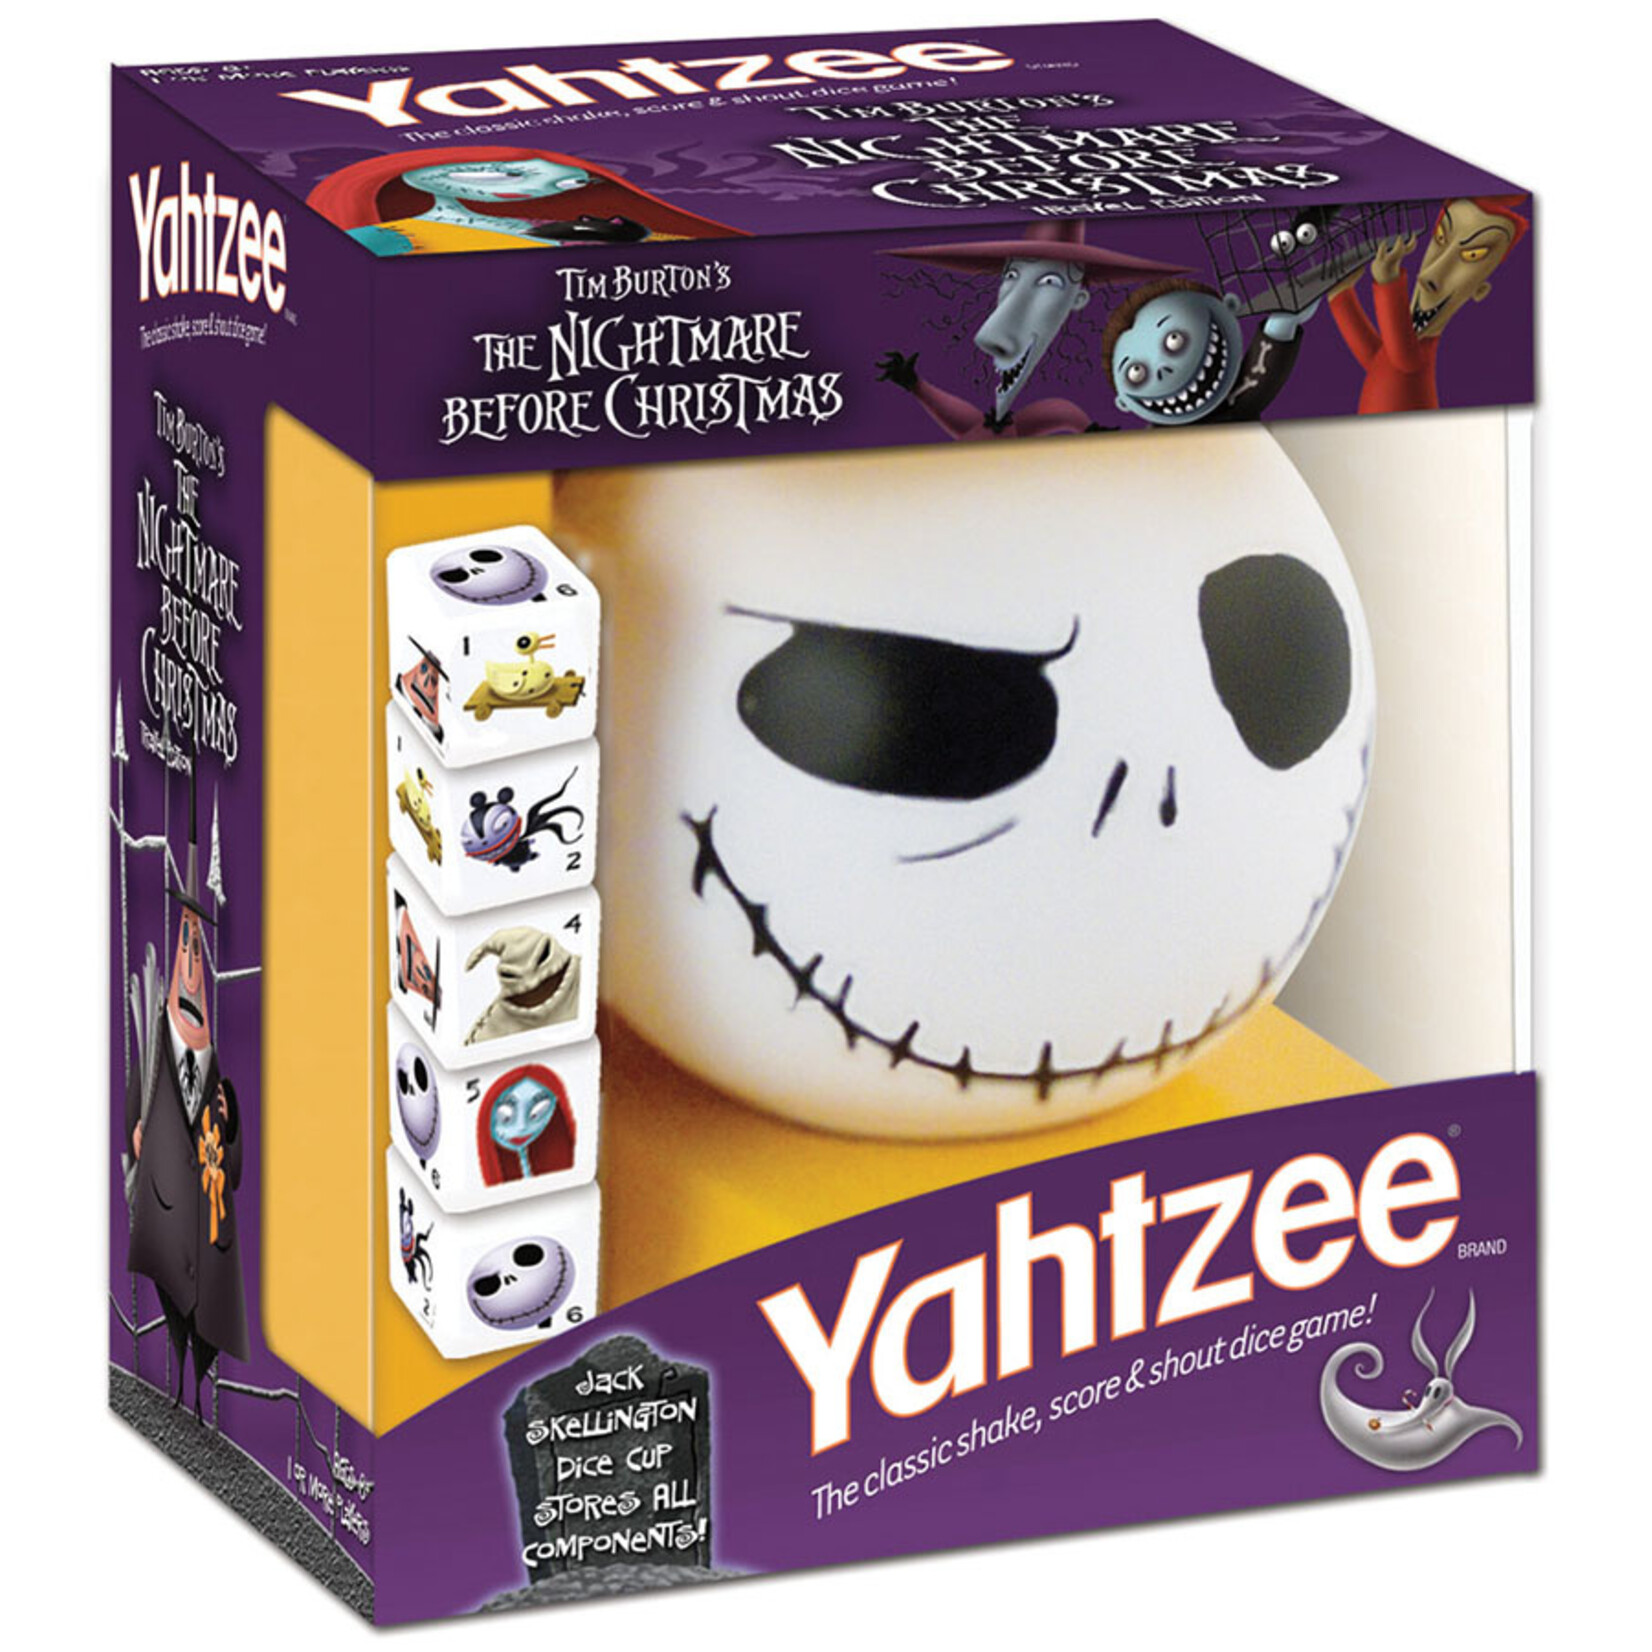 Yahtzee Dice Game, The Nightmare Before Christmas